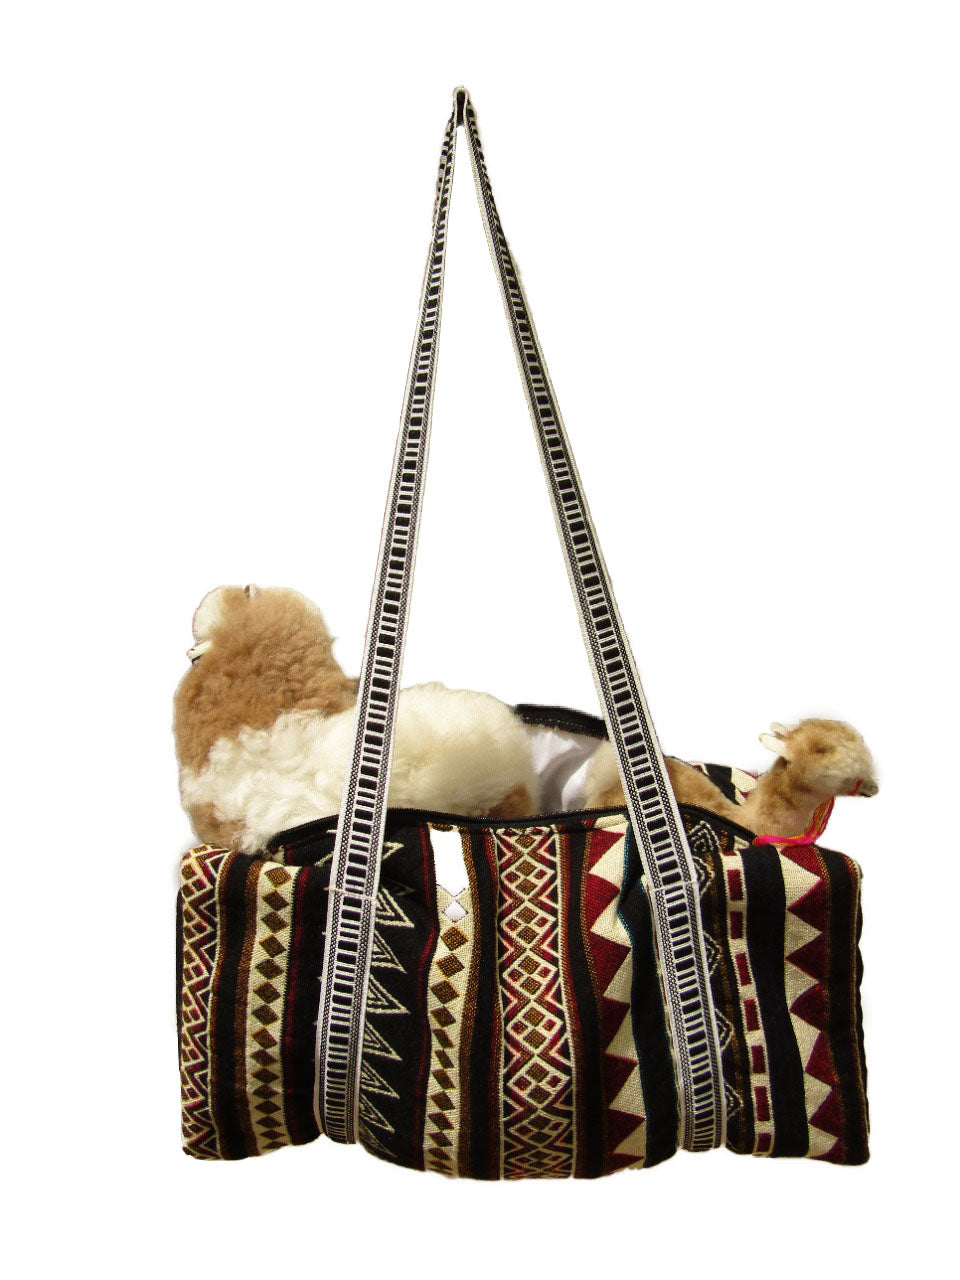 Alpaca/acrylic blend carry on bag, beach bag, diaper bag, overnight bag, lightweight travel bag